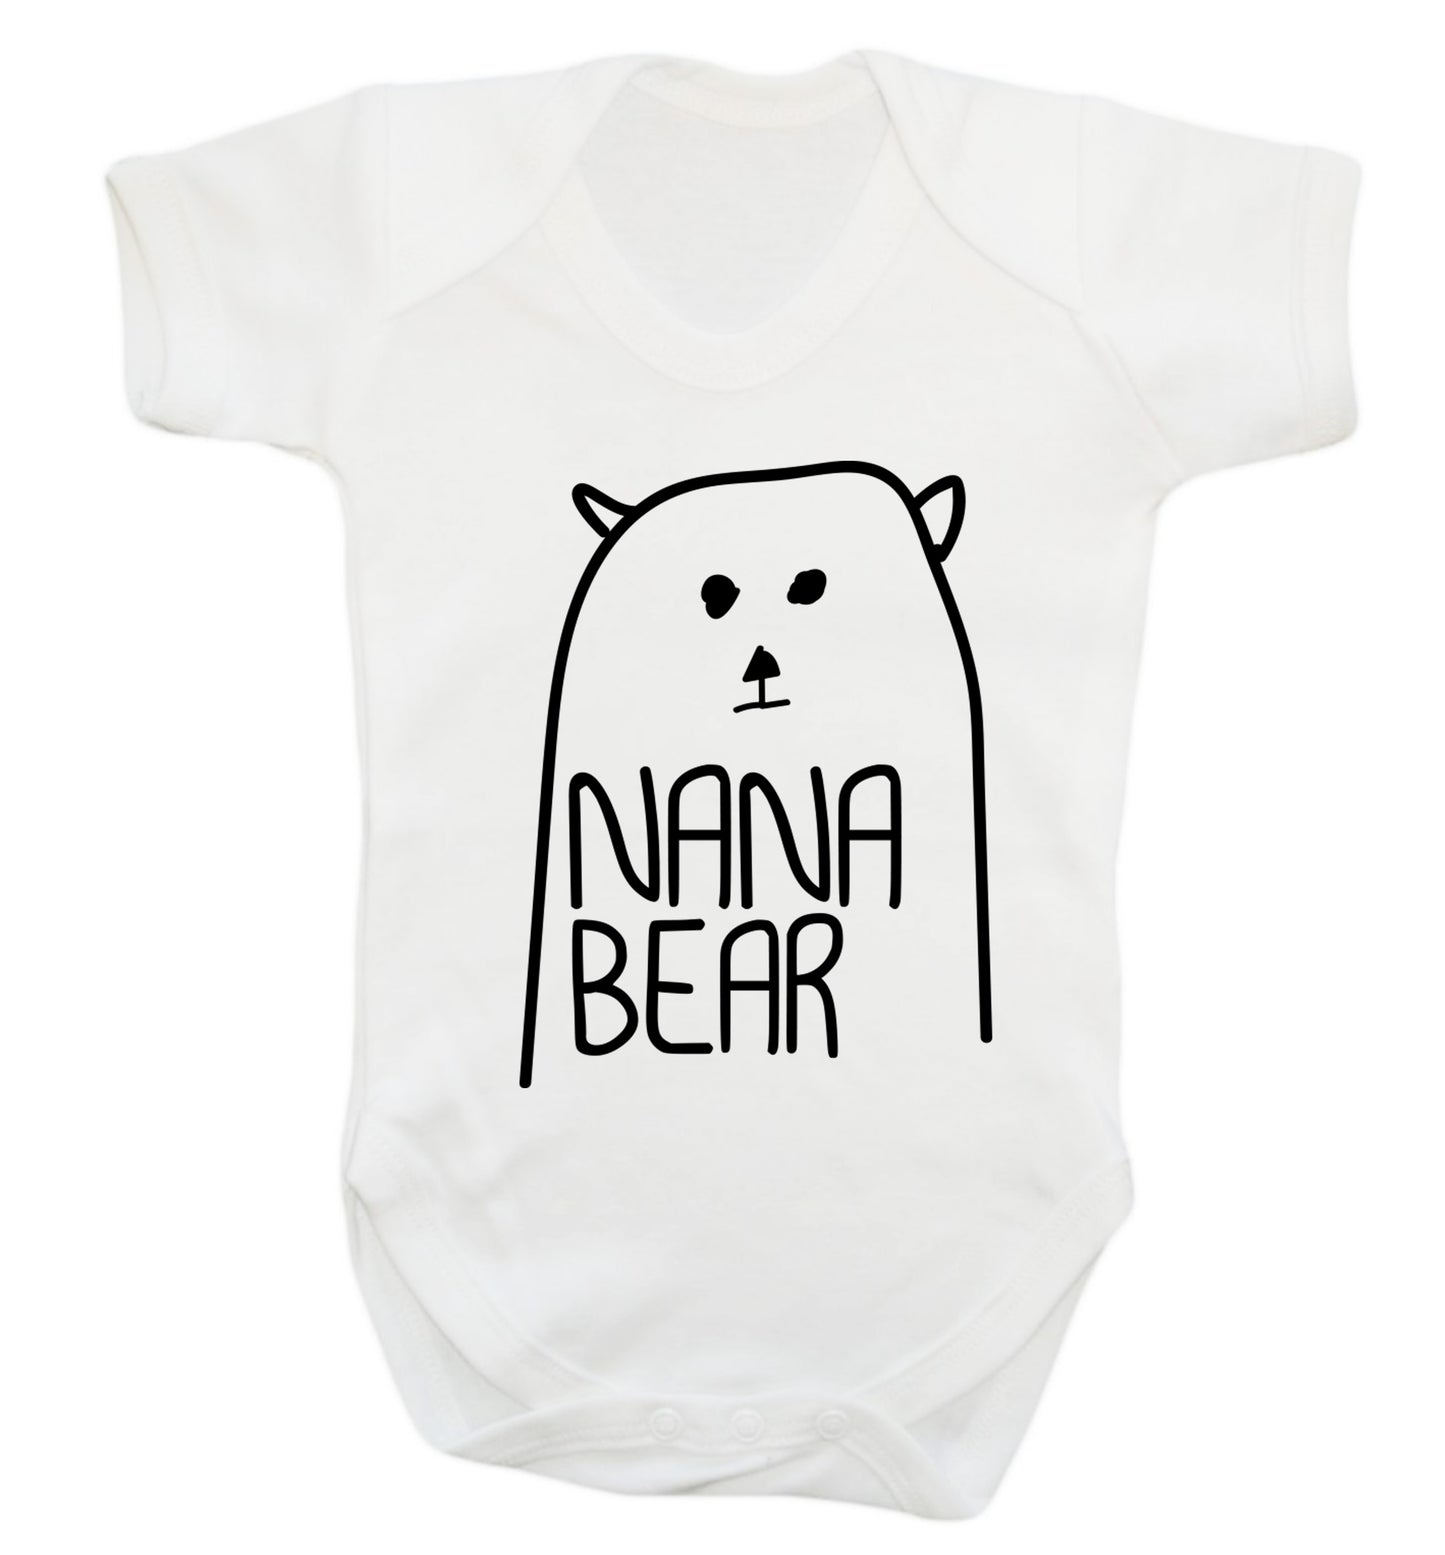 Nana bear Baby Vest white 18-24 months